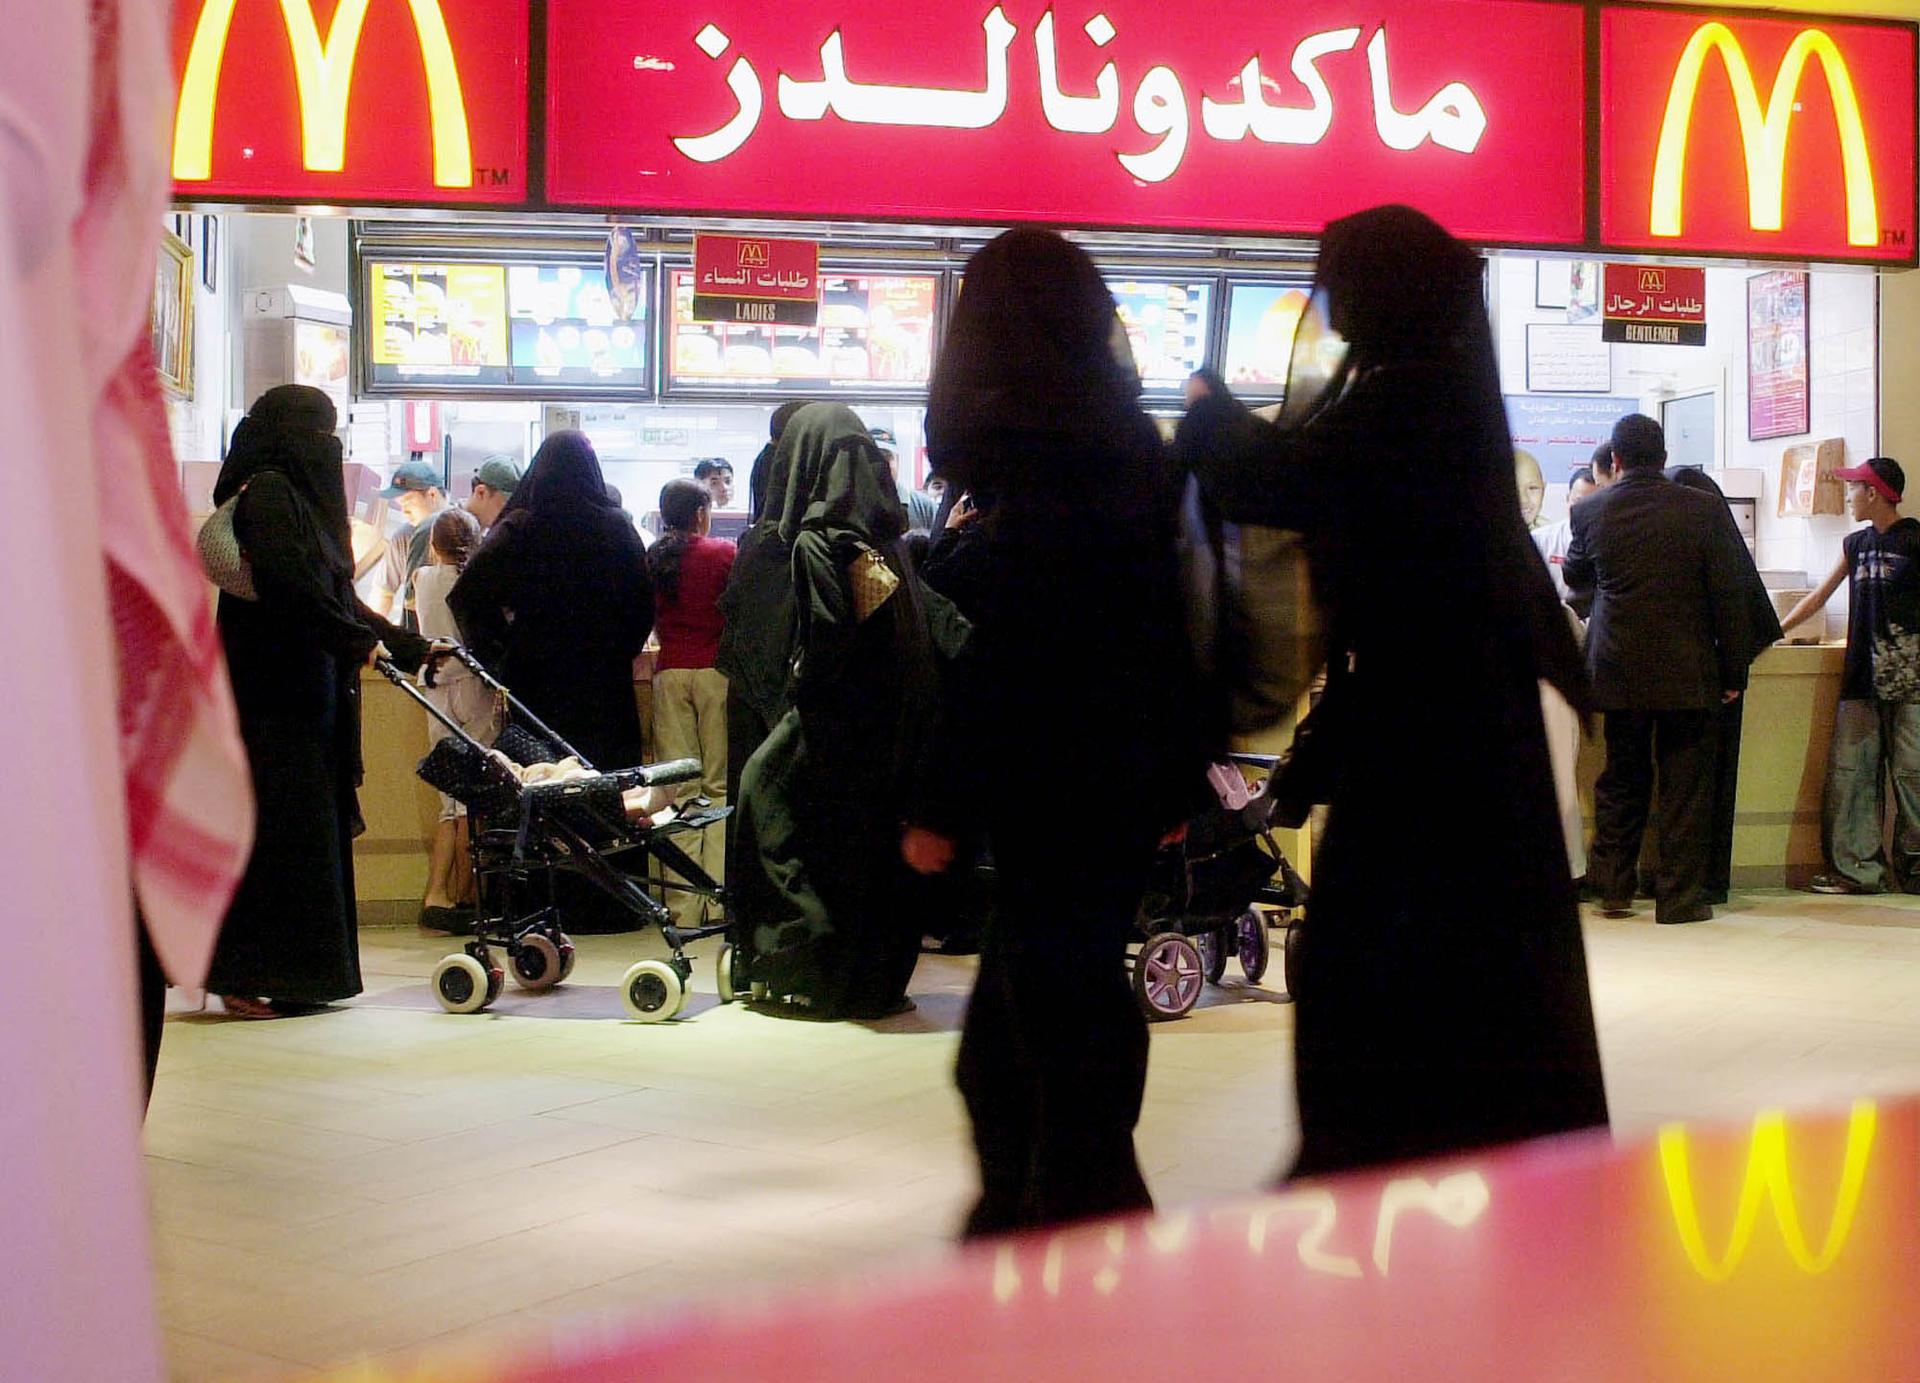 Saudis gather by a McDonald's fast food restaurant in a Riyadh, Saudi Arabia, shopping mall, Oct. 31, 2003.